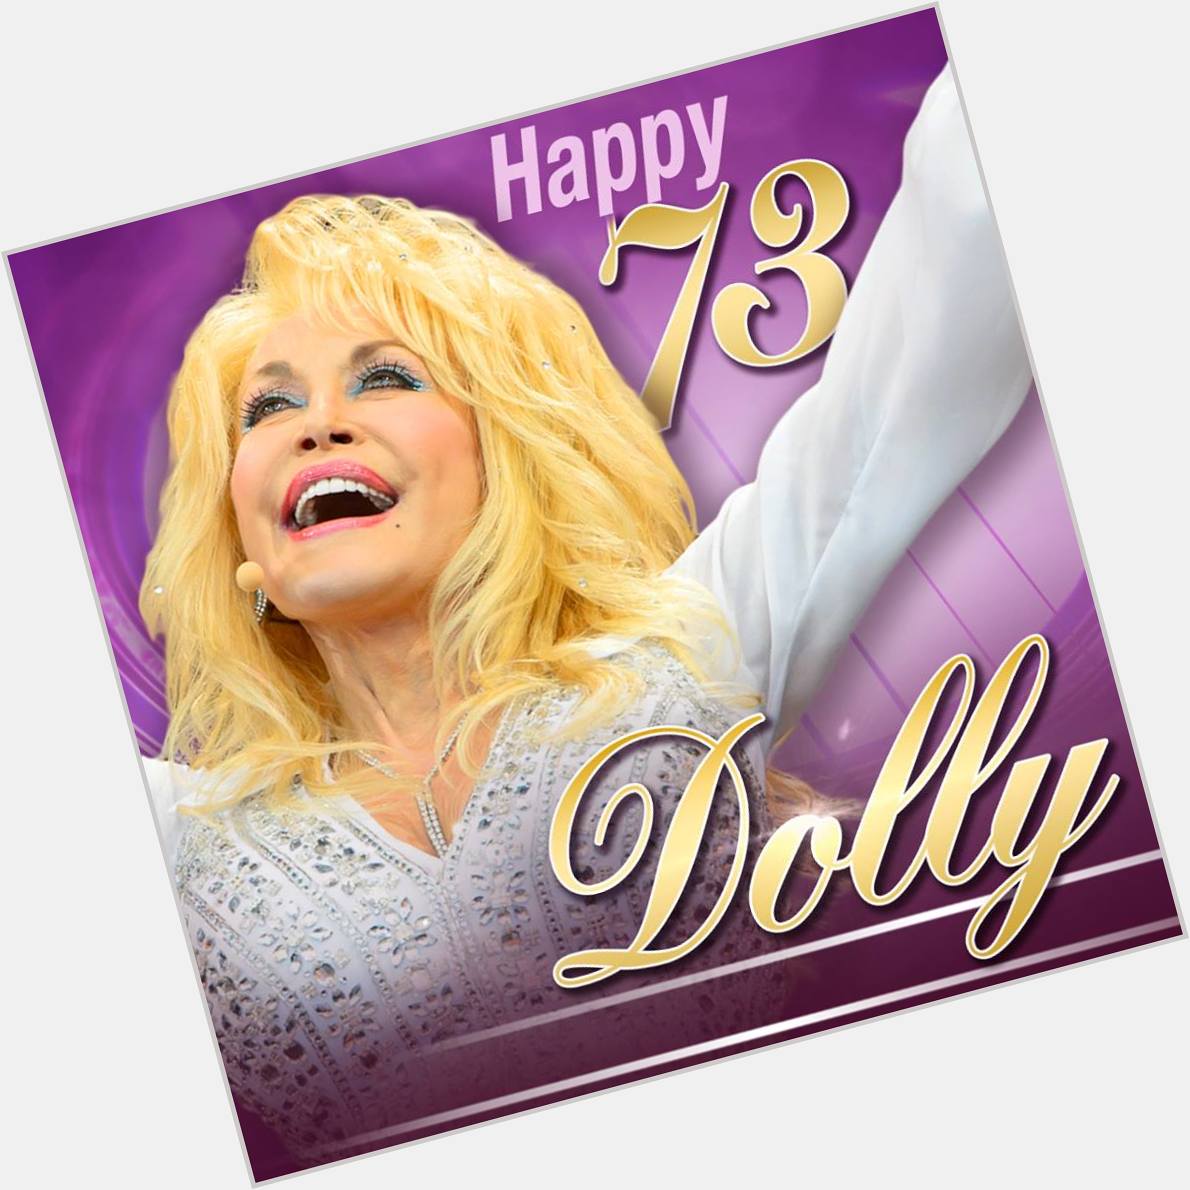 Happy birthday to Dolly Parton who turns 73 today! 